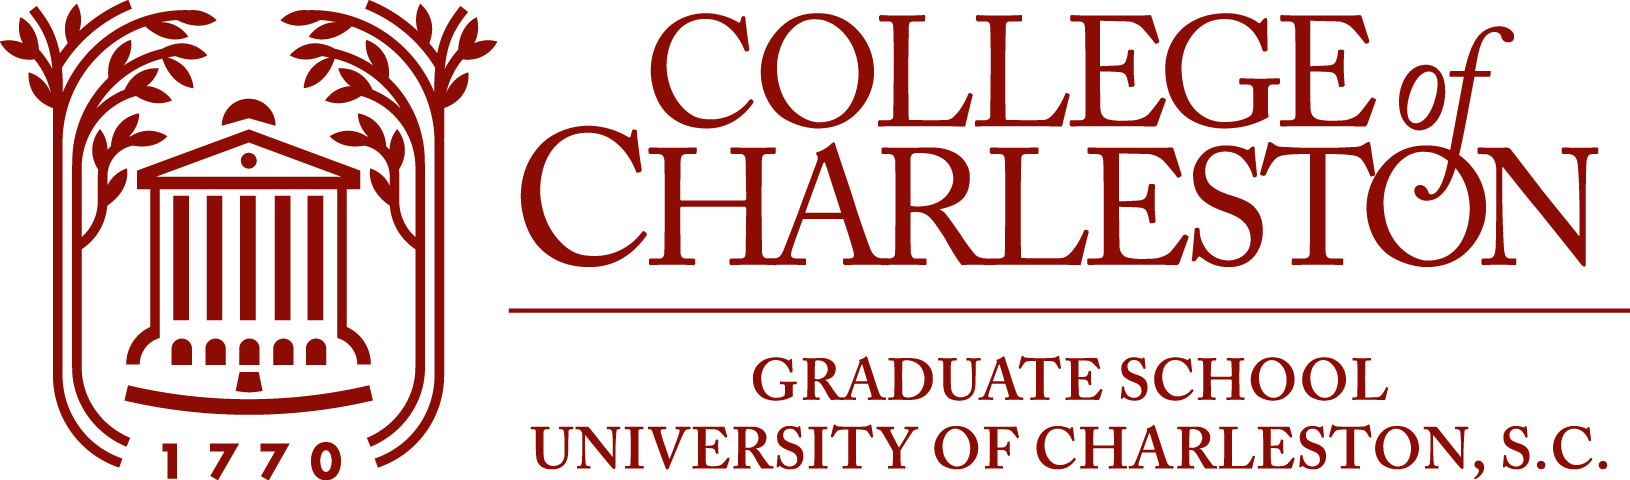 University of Charleston, South Carolina - The Graduate School of the College of Charleston